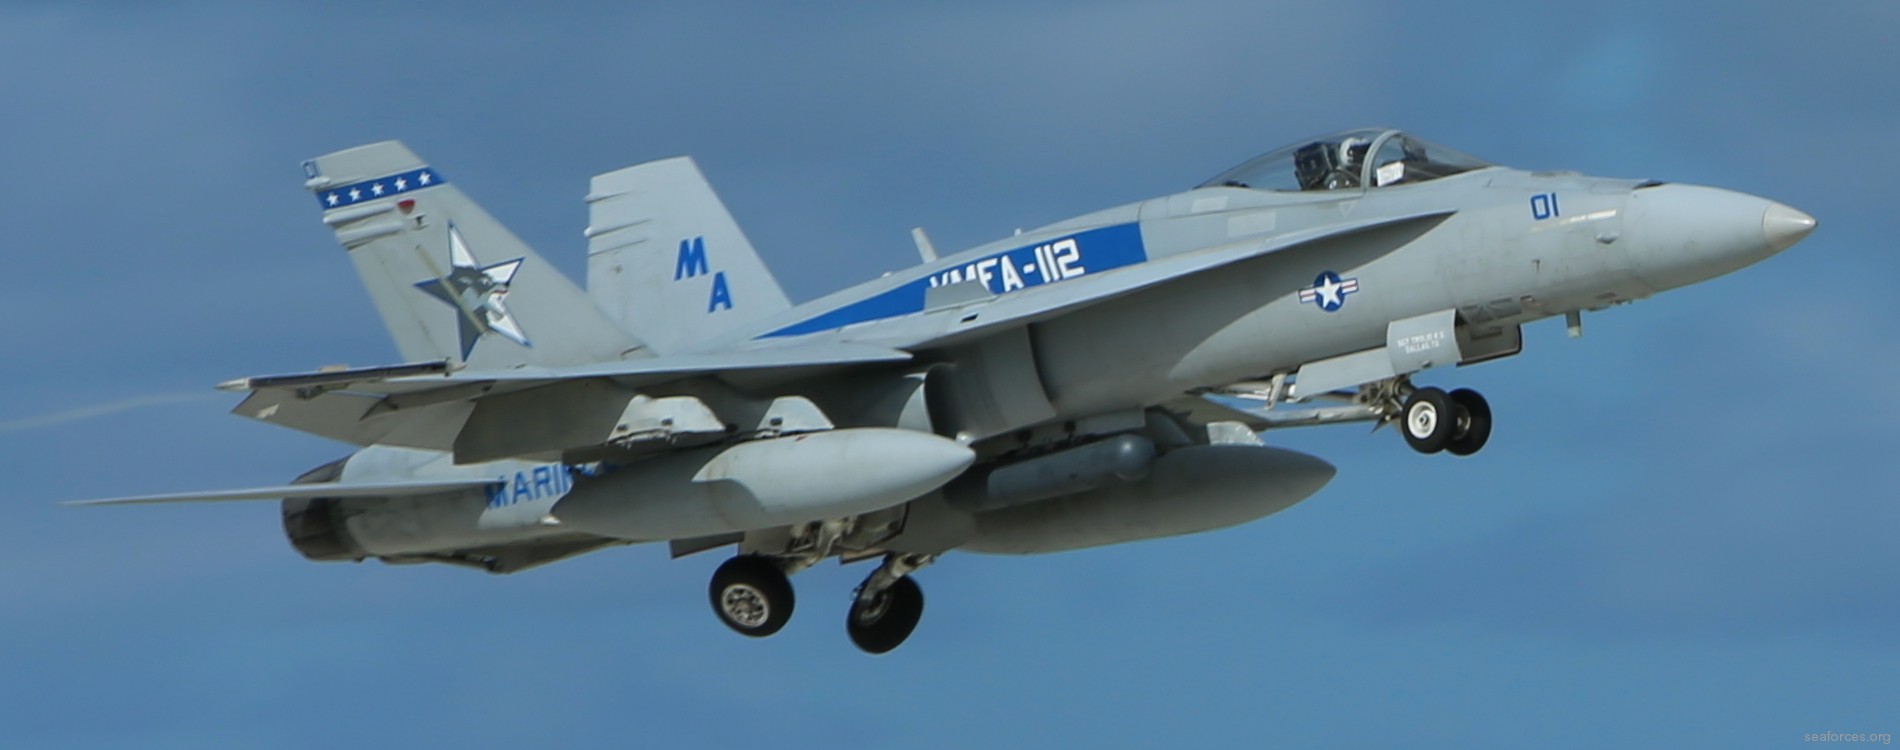 vmfa-112 cowboys marine fighter attack squadron f/a-18a+ hornet 21